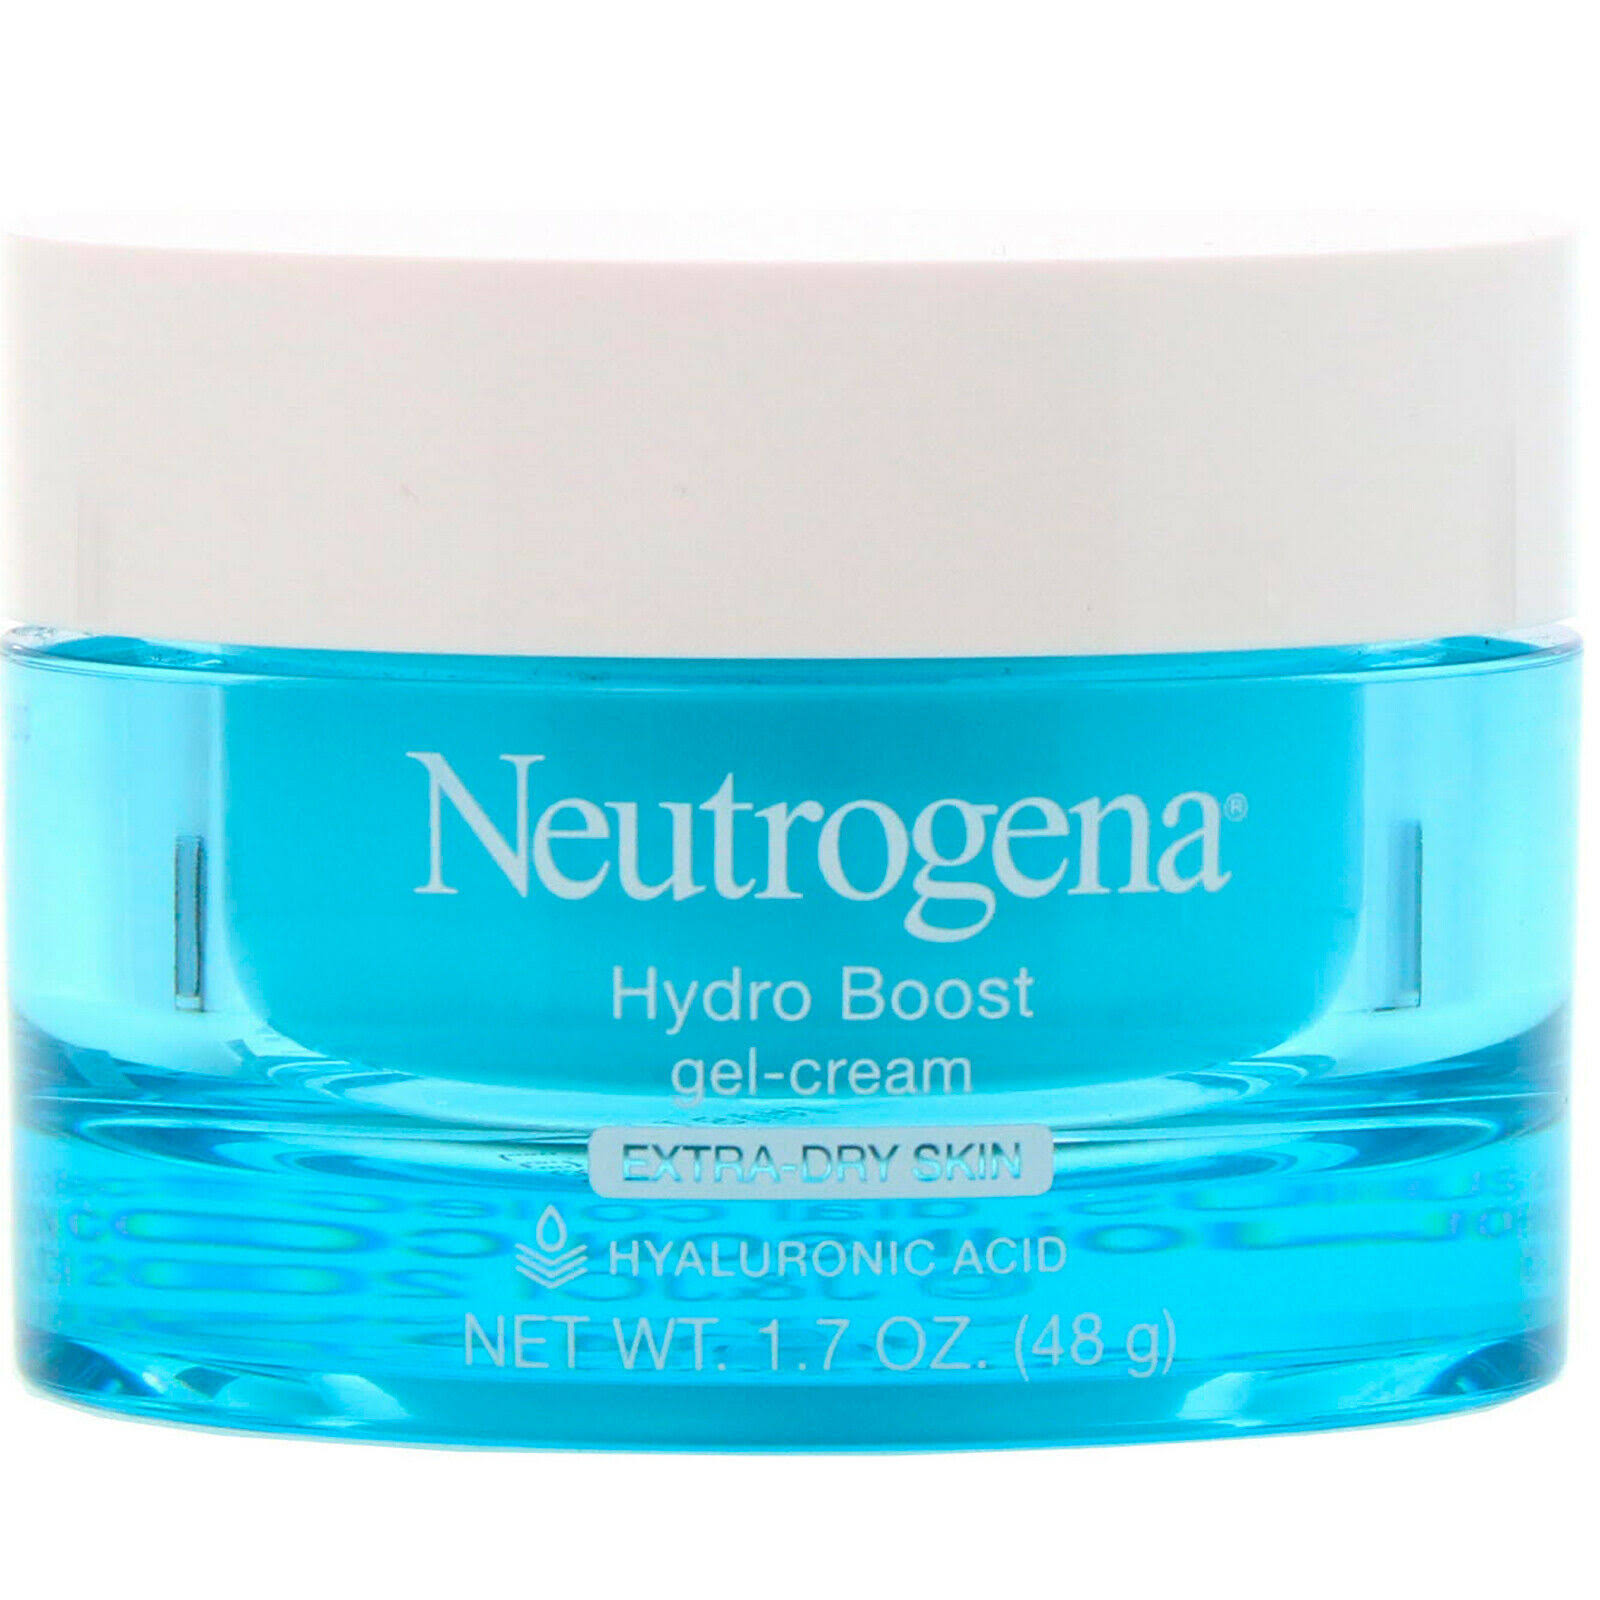 Neutrogena Hydro Boost Gel Cream - Extra Dry Skin, 1.7oz